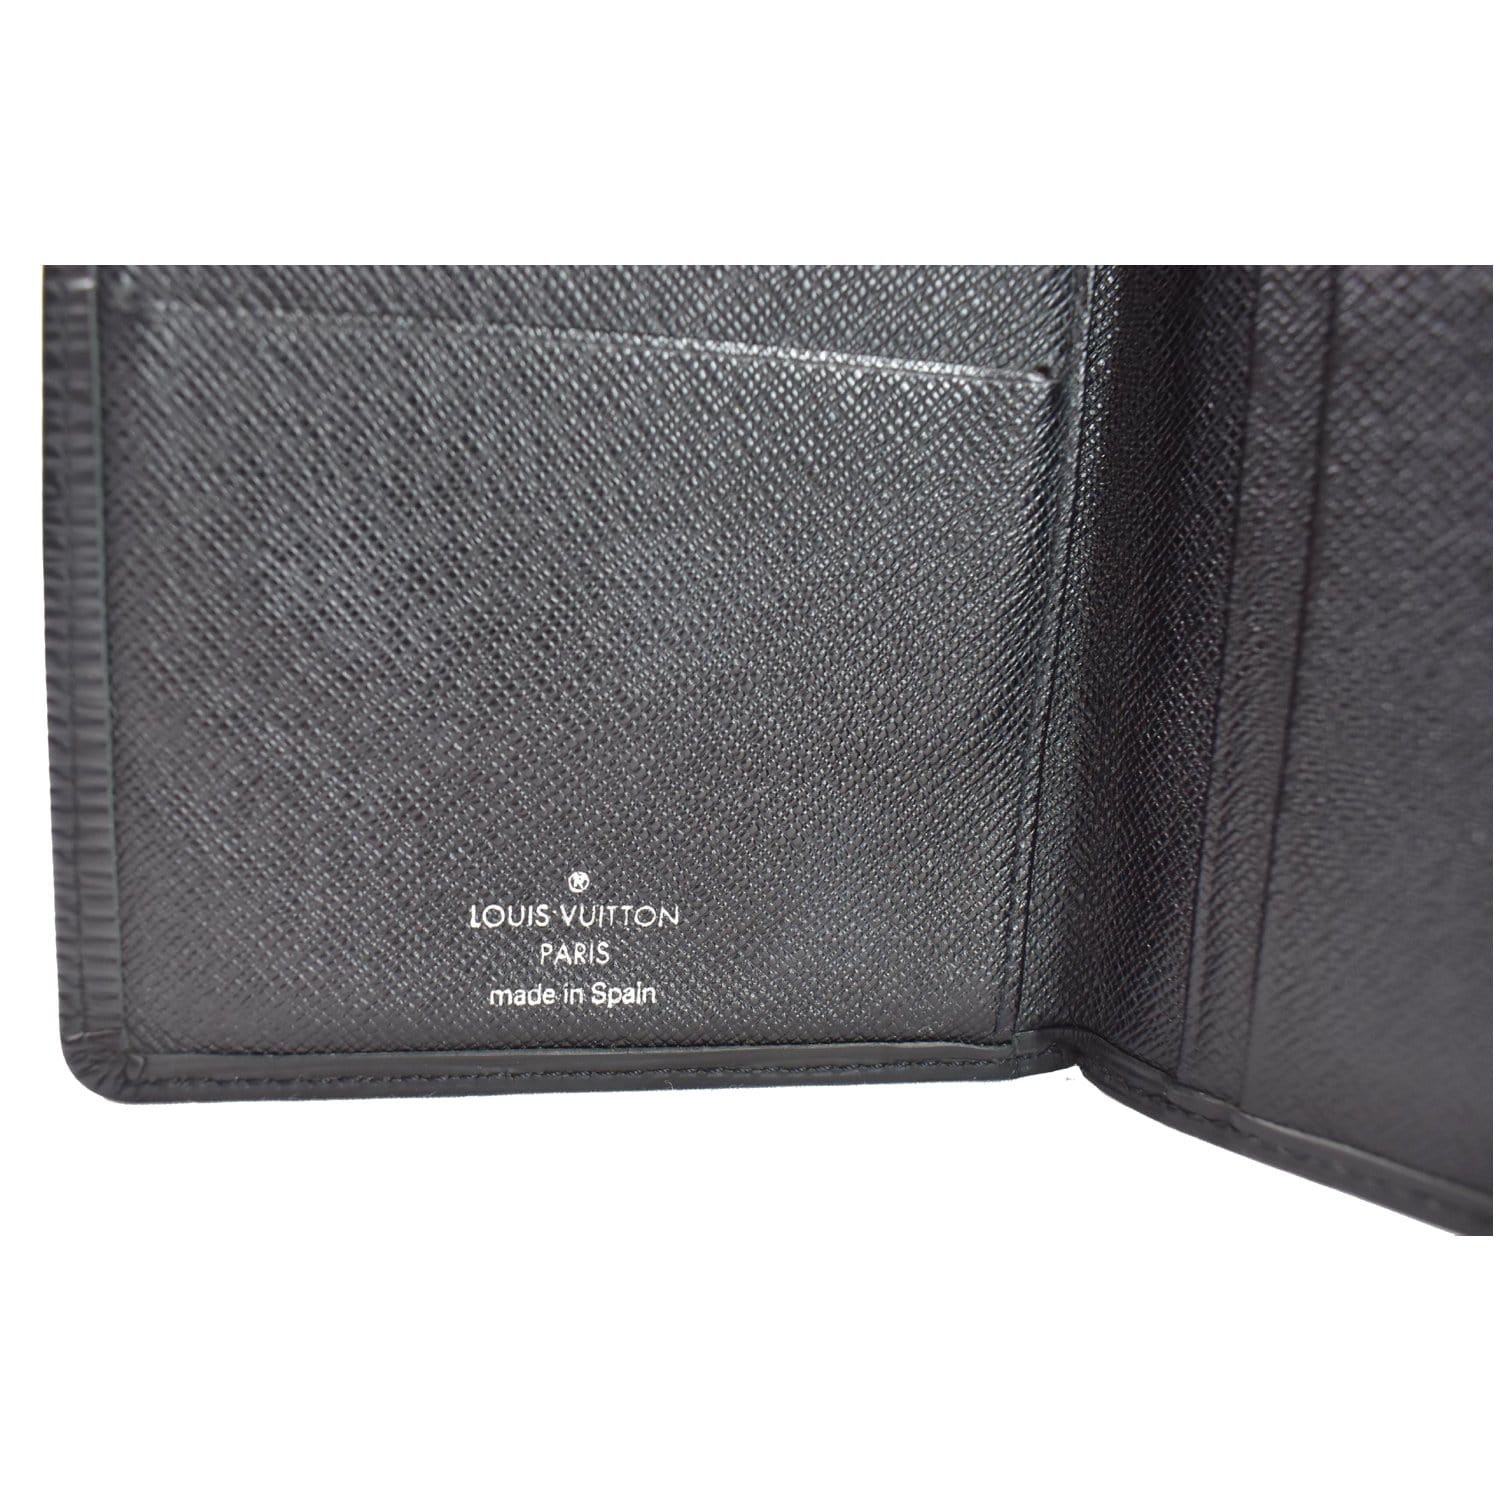 Louis Vuitton, Bags, Euc Louis Vuitton Epi Leather Passport Holder Travel  Wallet